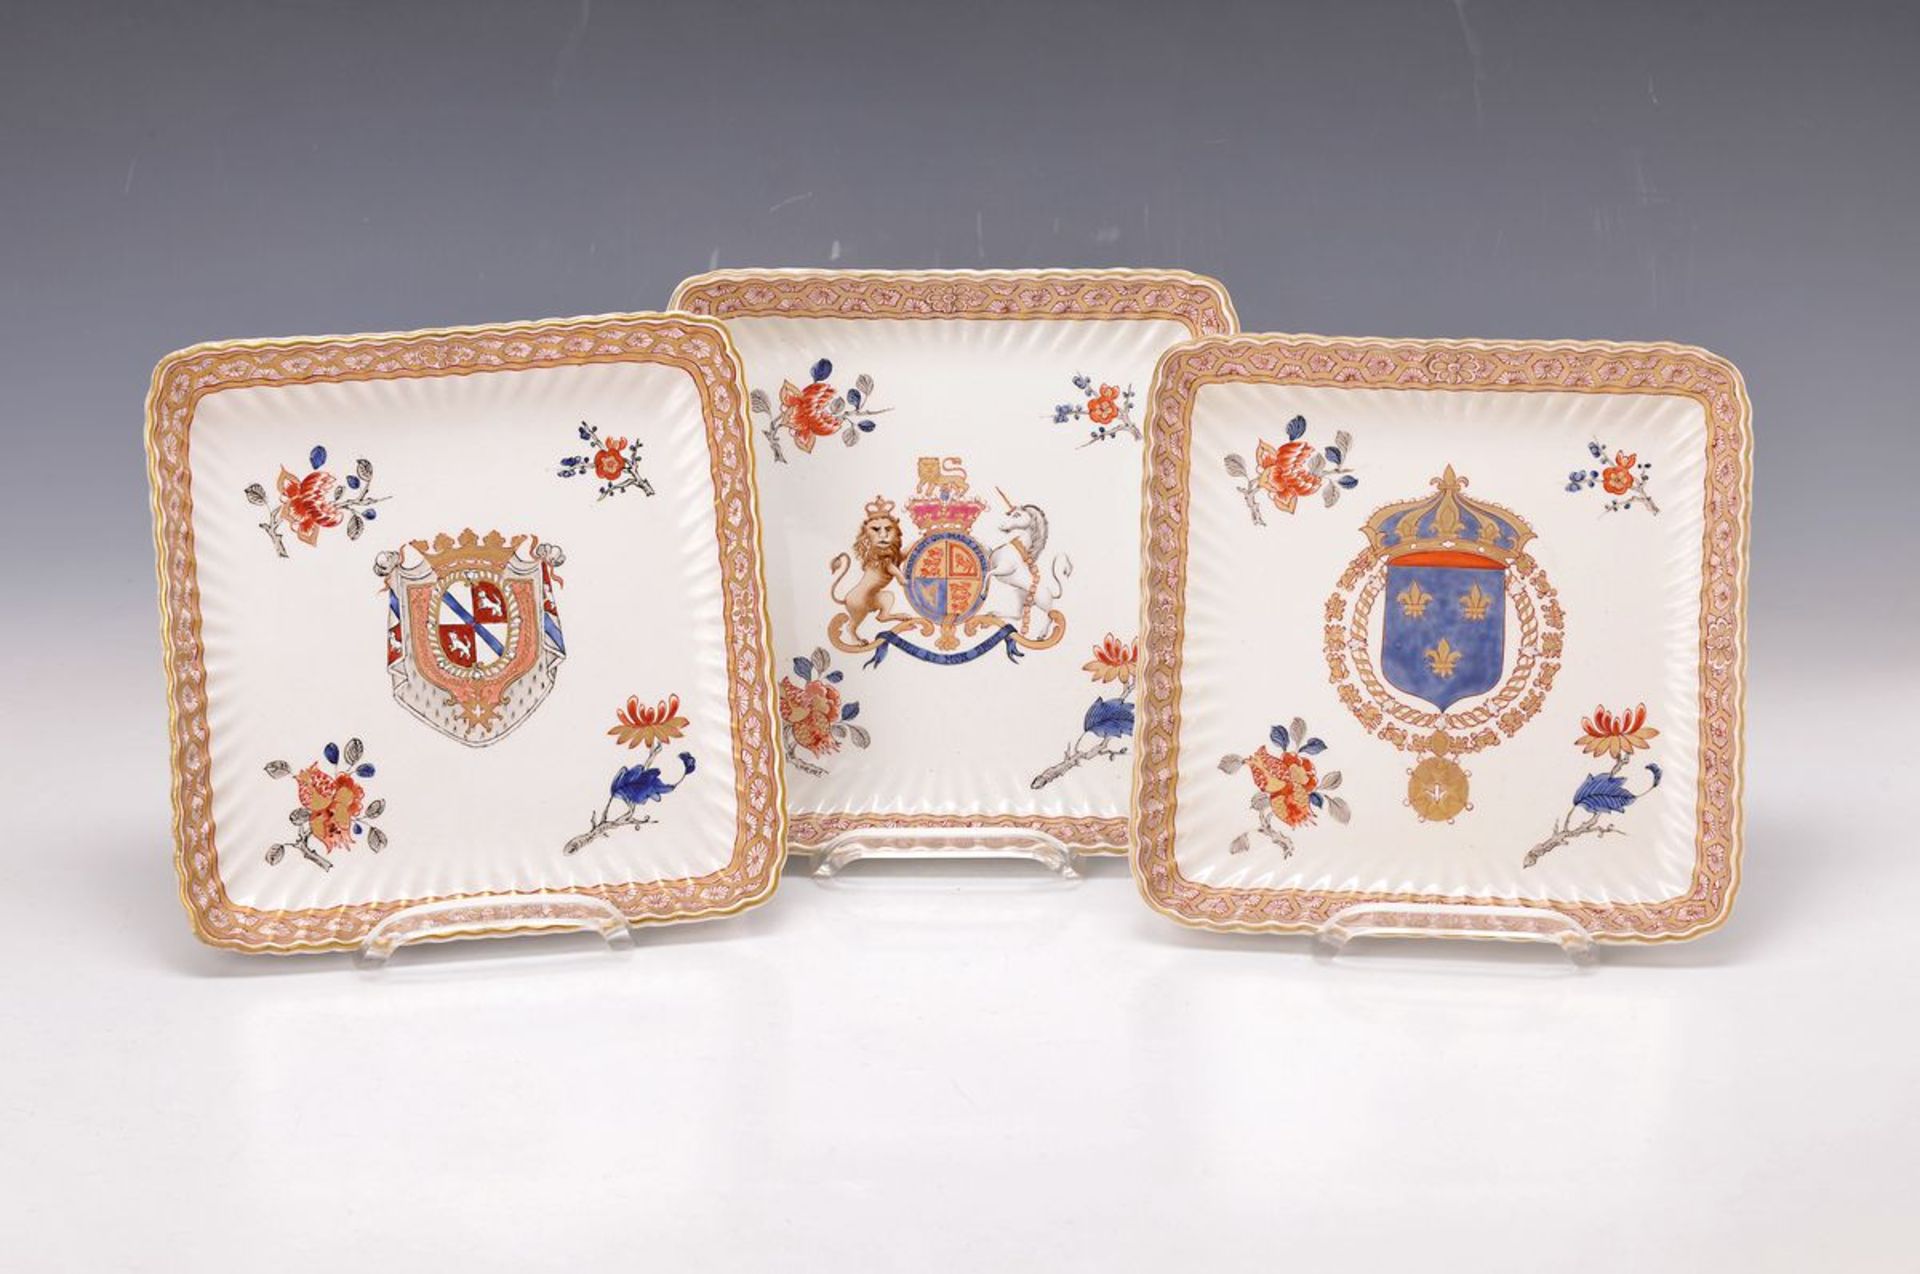 Drei Wappenteller, Frankreich, um 1890/1900, Steingut, polychrom bemalt, Goldstaffage, ca. 20.5 x